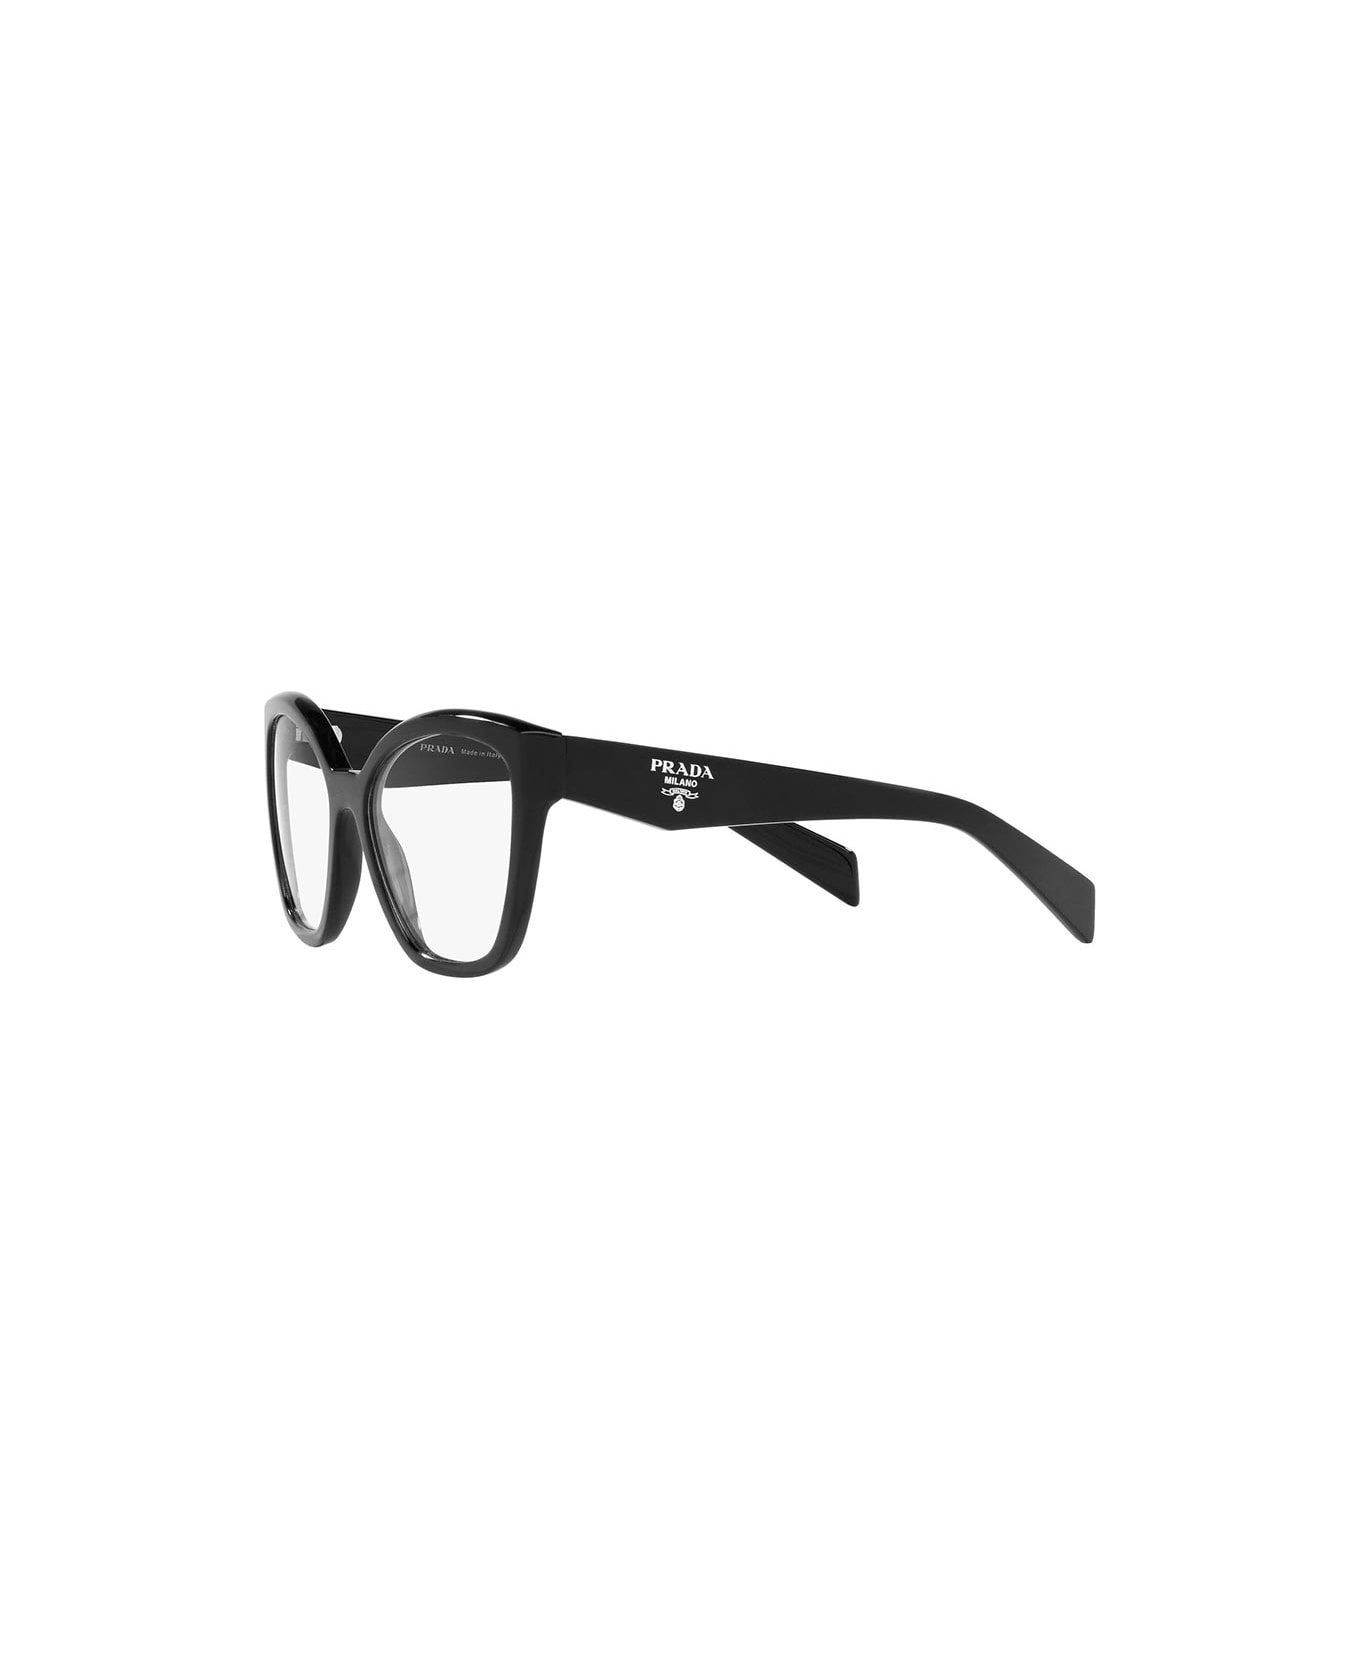 Prada Eyewear Glasses - 16K1O1